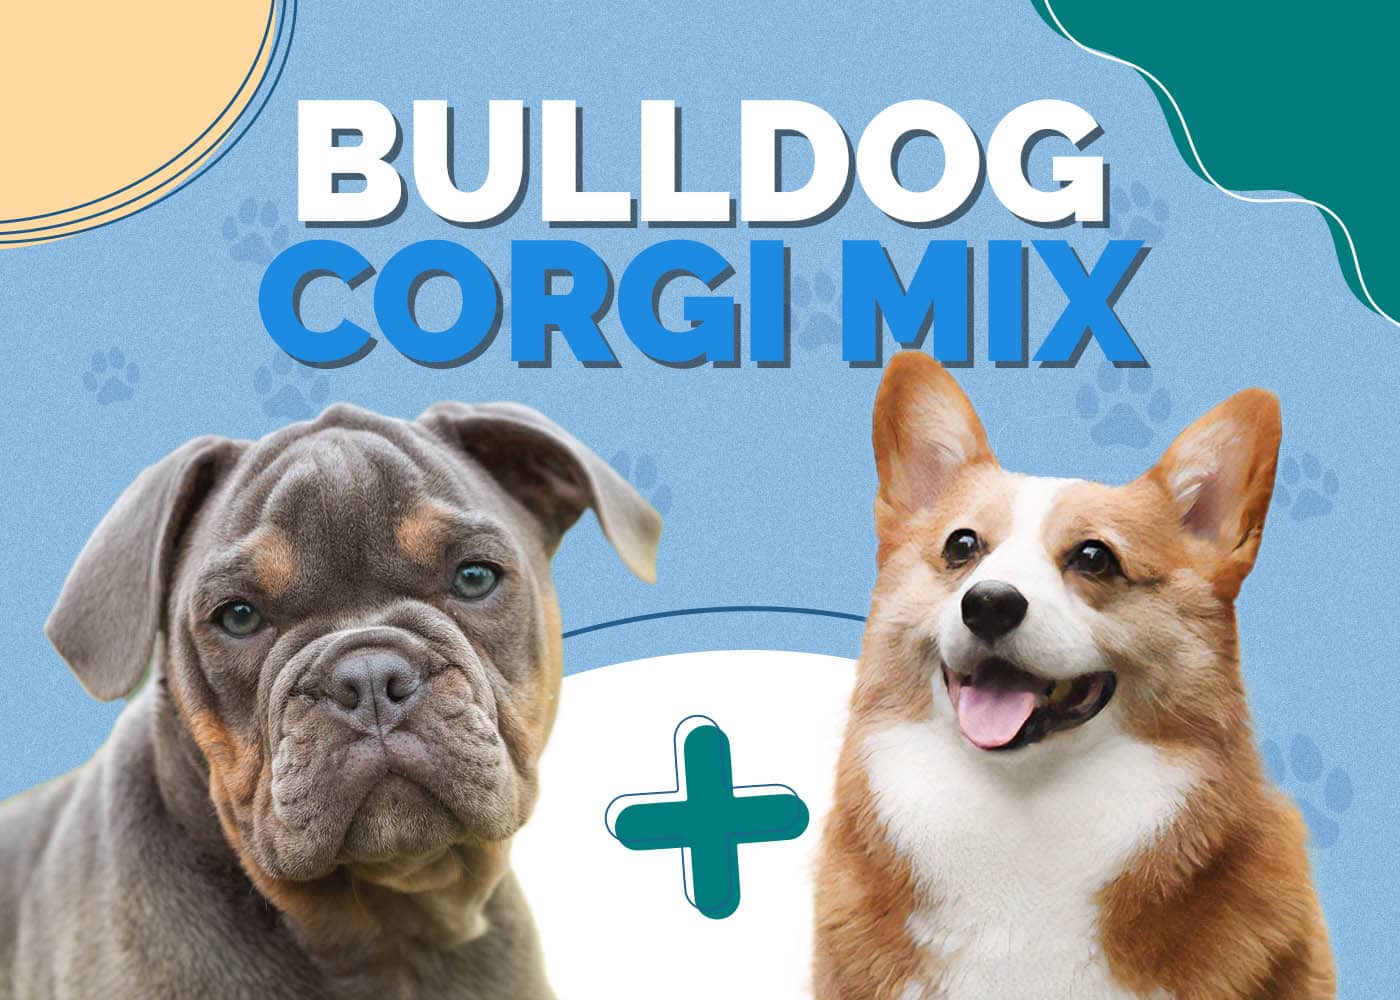 Bulldog Corgi Mix